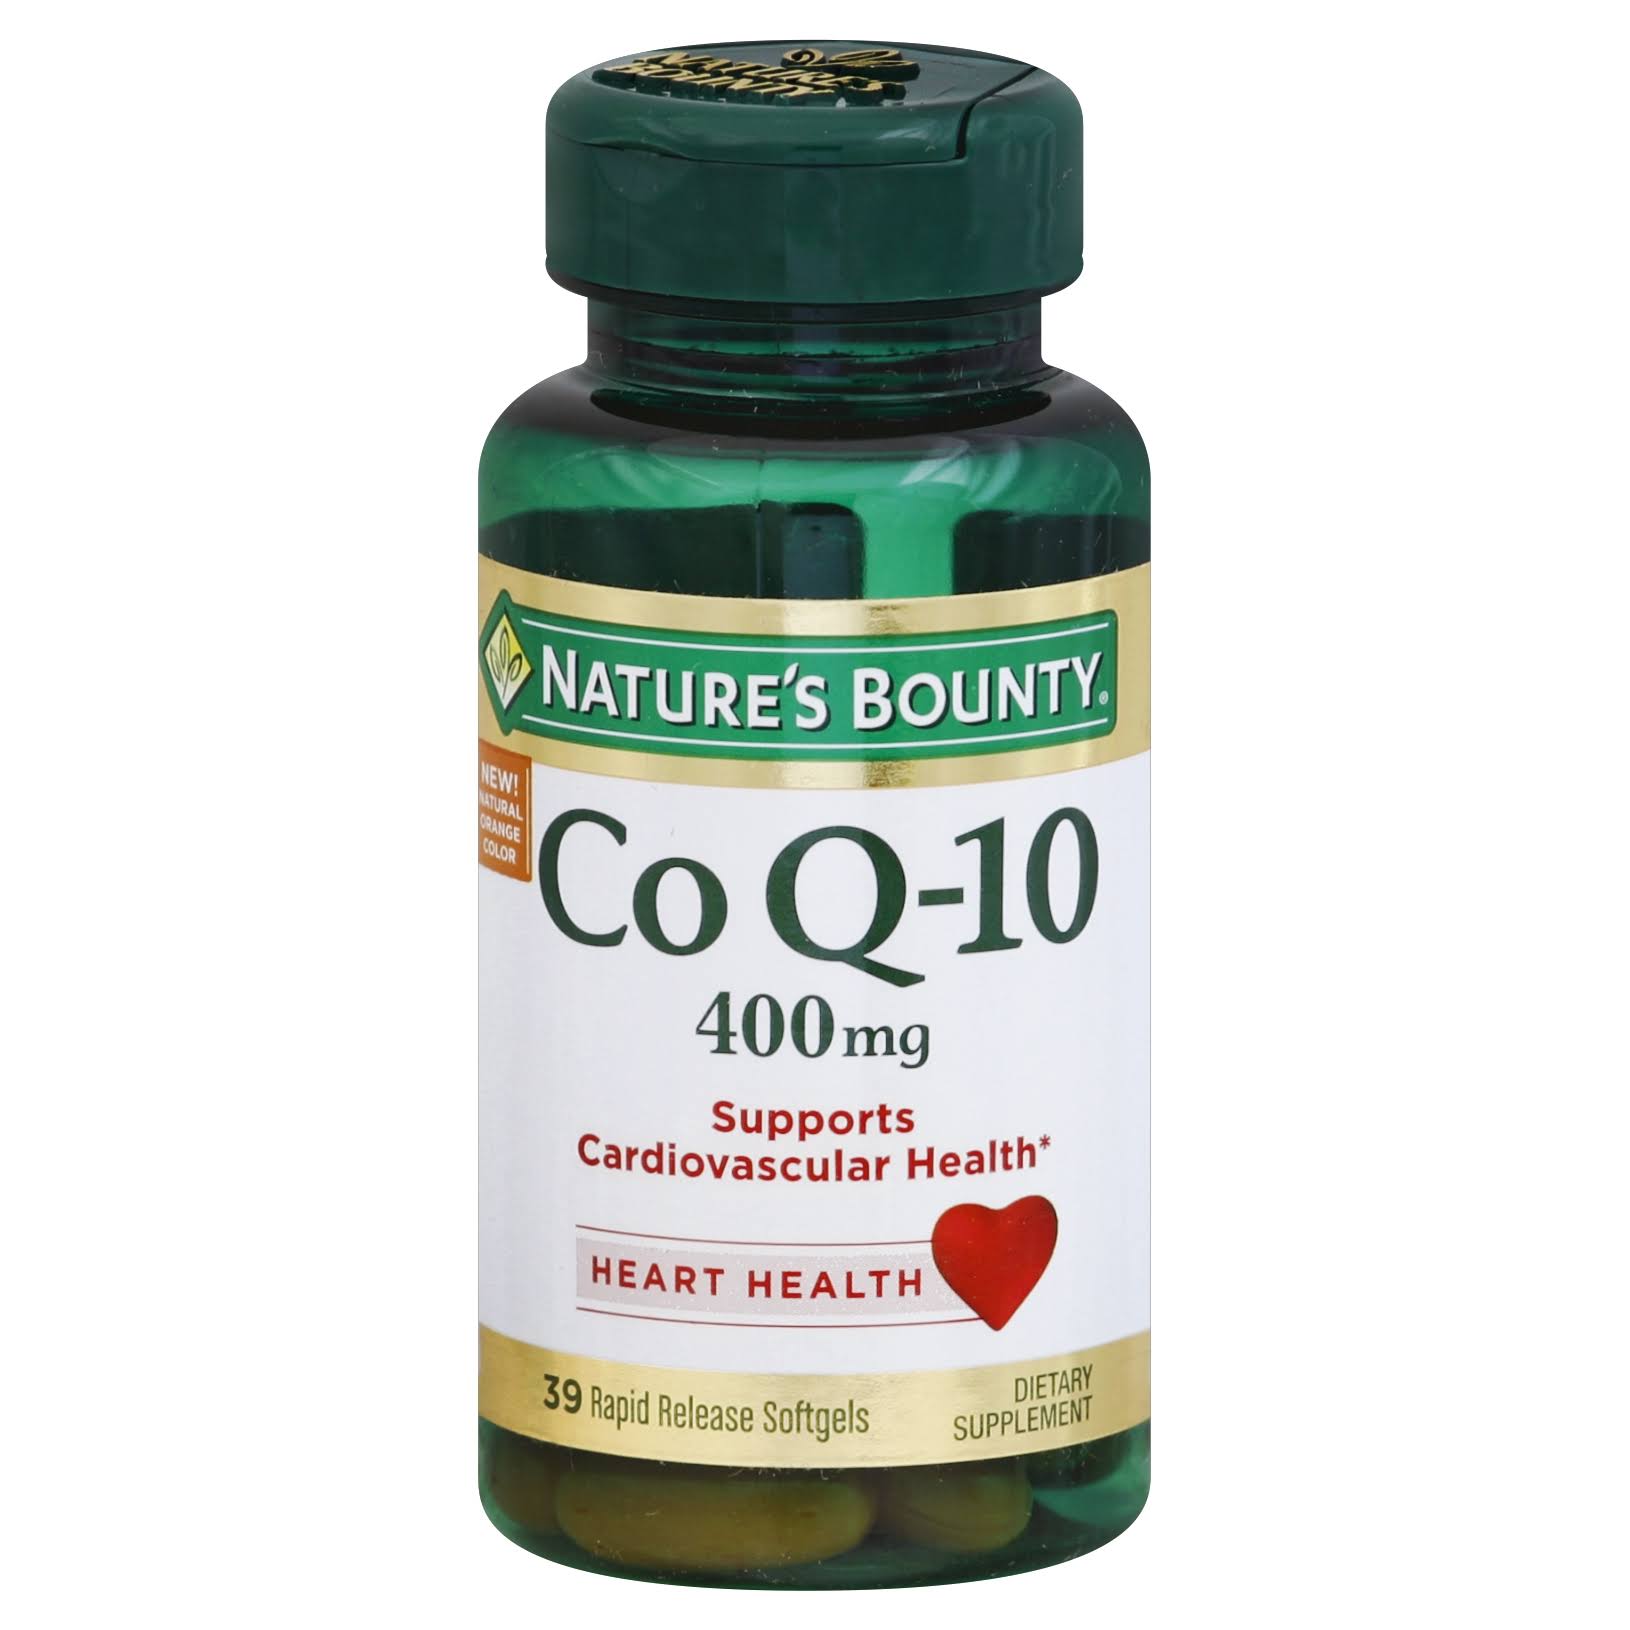 Nature's Bounty Co Q-10 Supplement - 400mg, 39 Rapid Release Gels